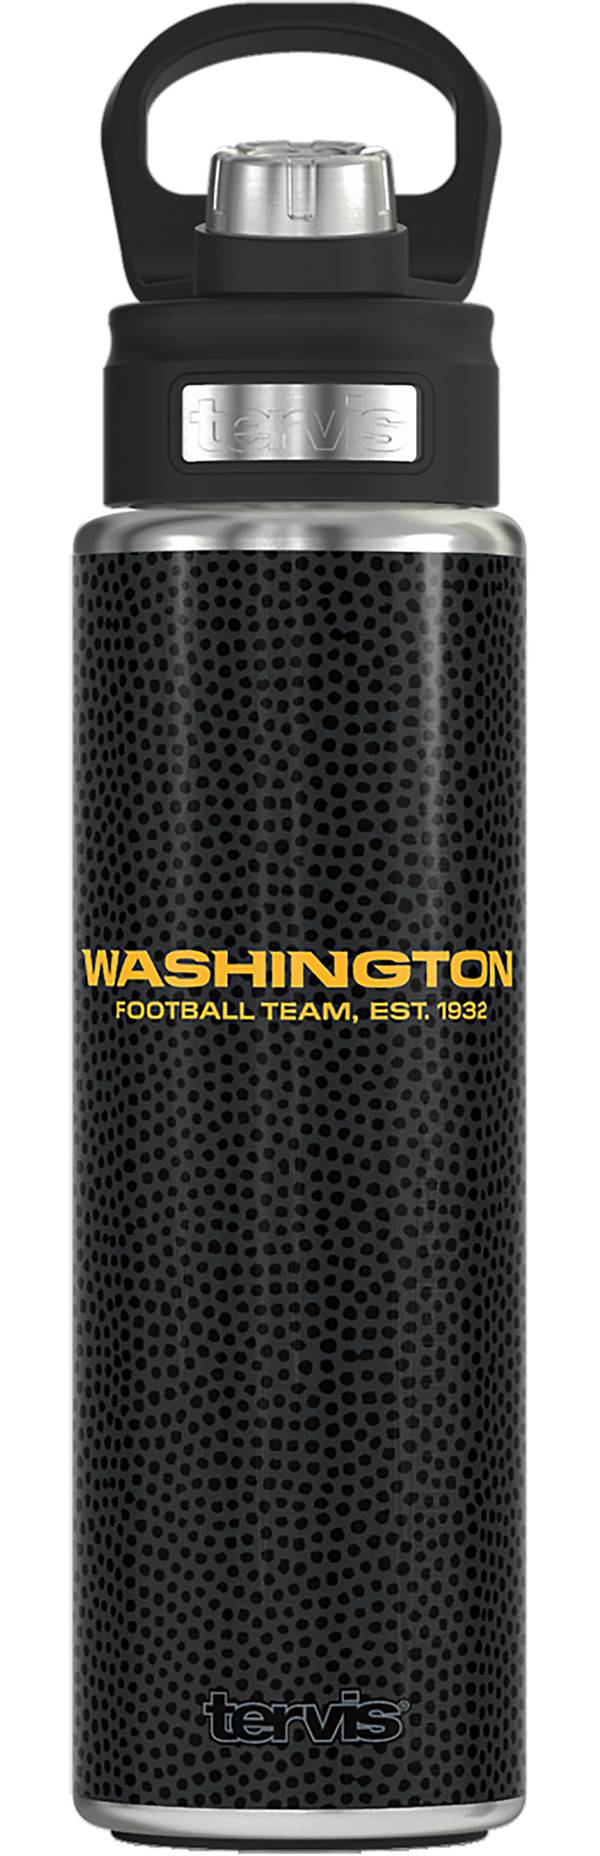 Tervis Washington Football Team Logo Stainless Steel 24oz. Water Bottle product image